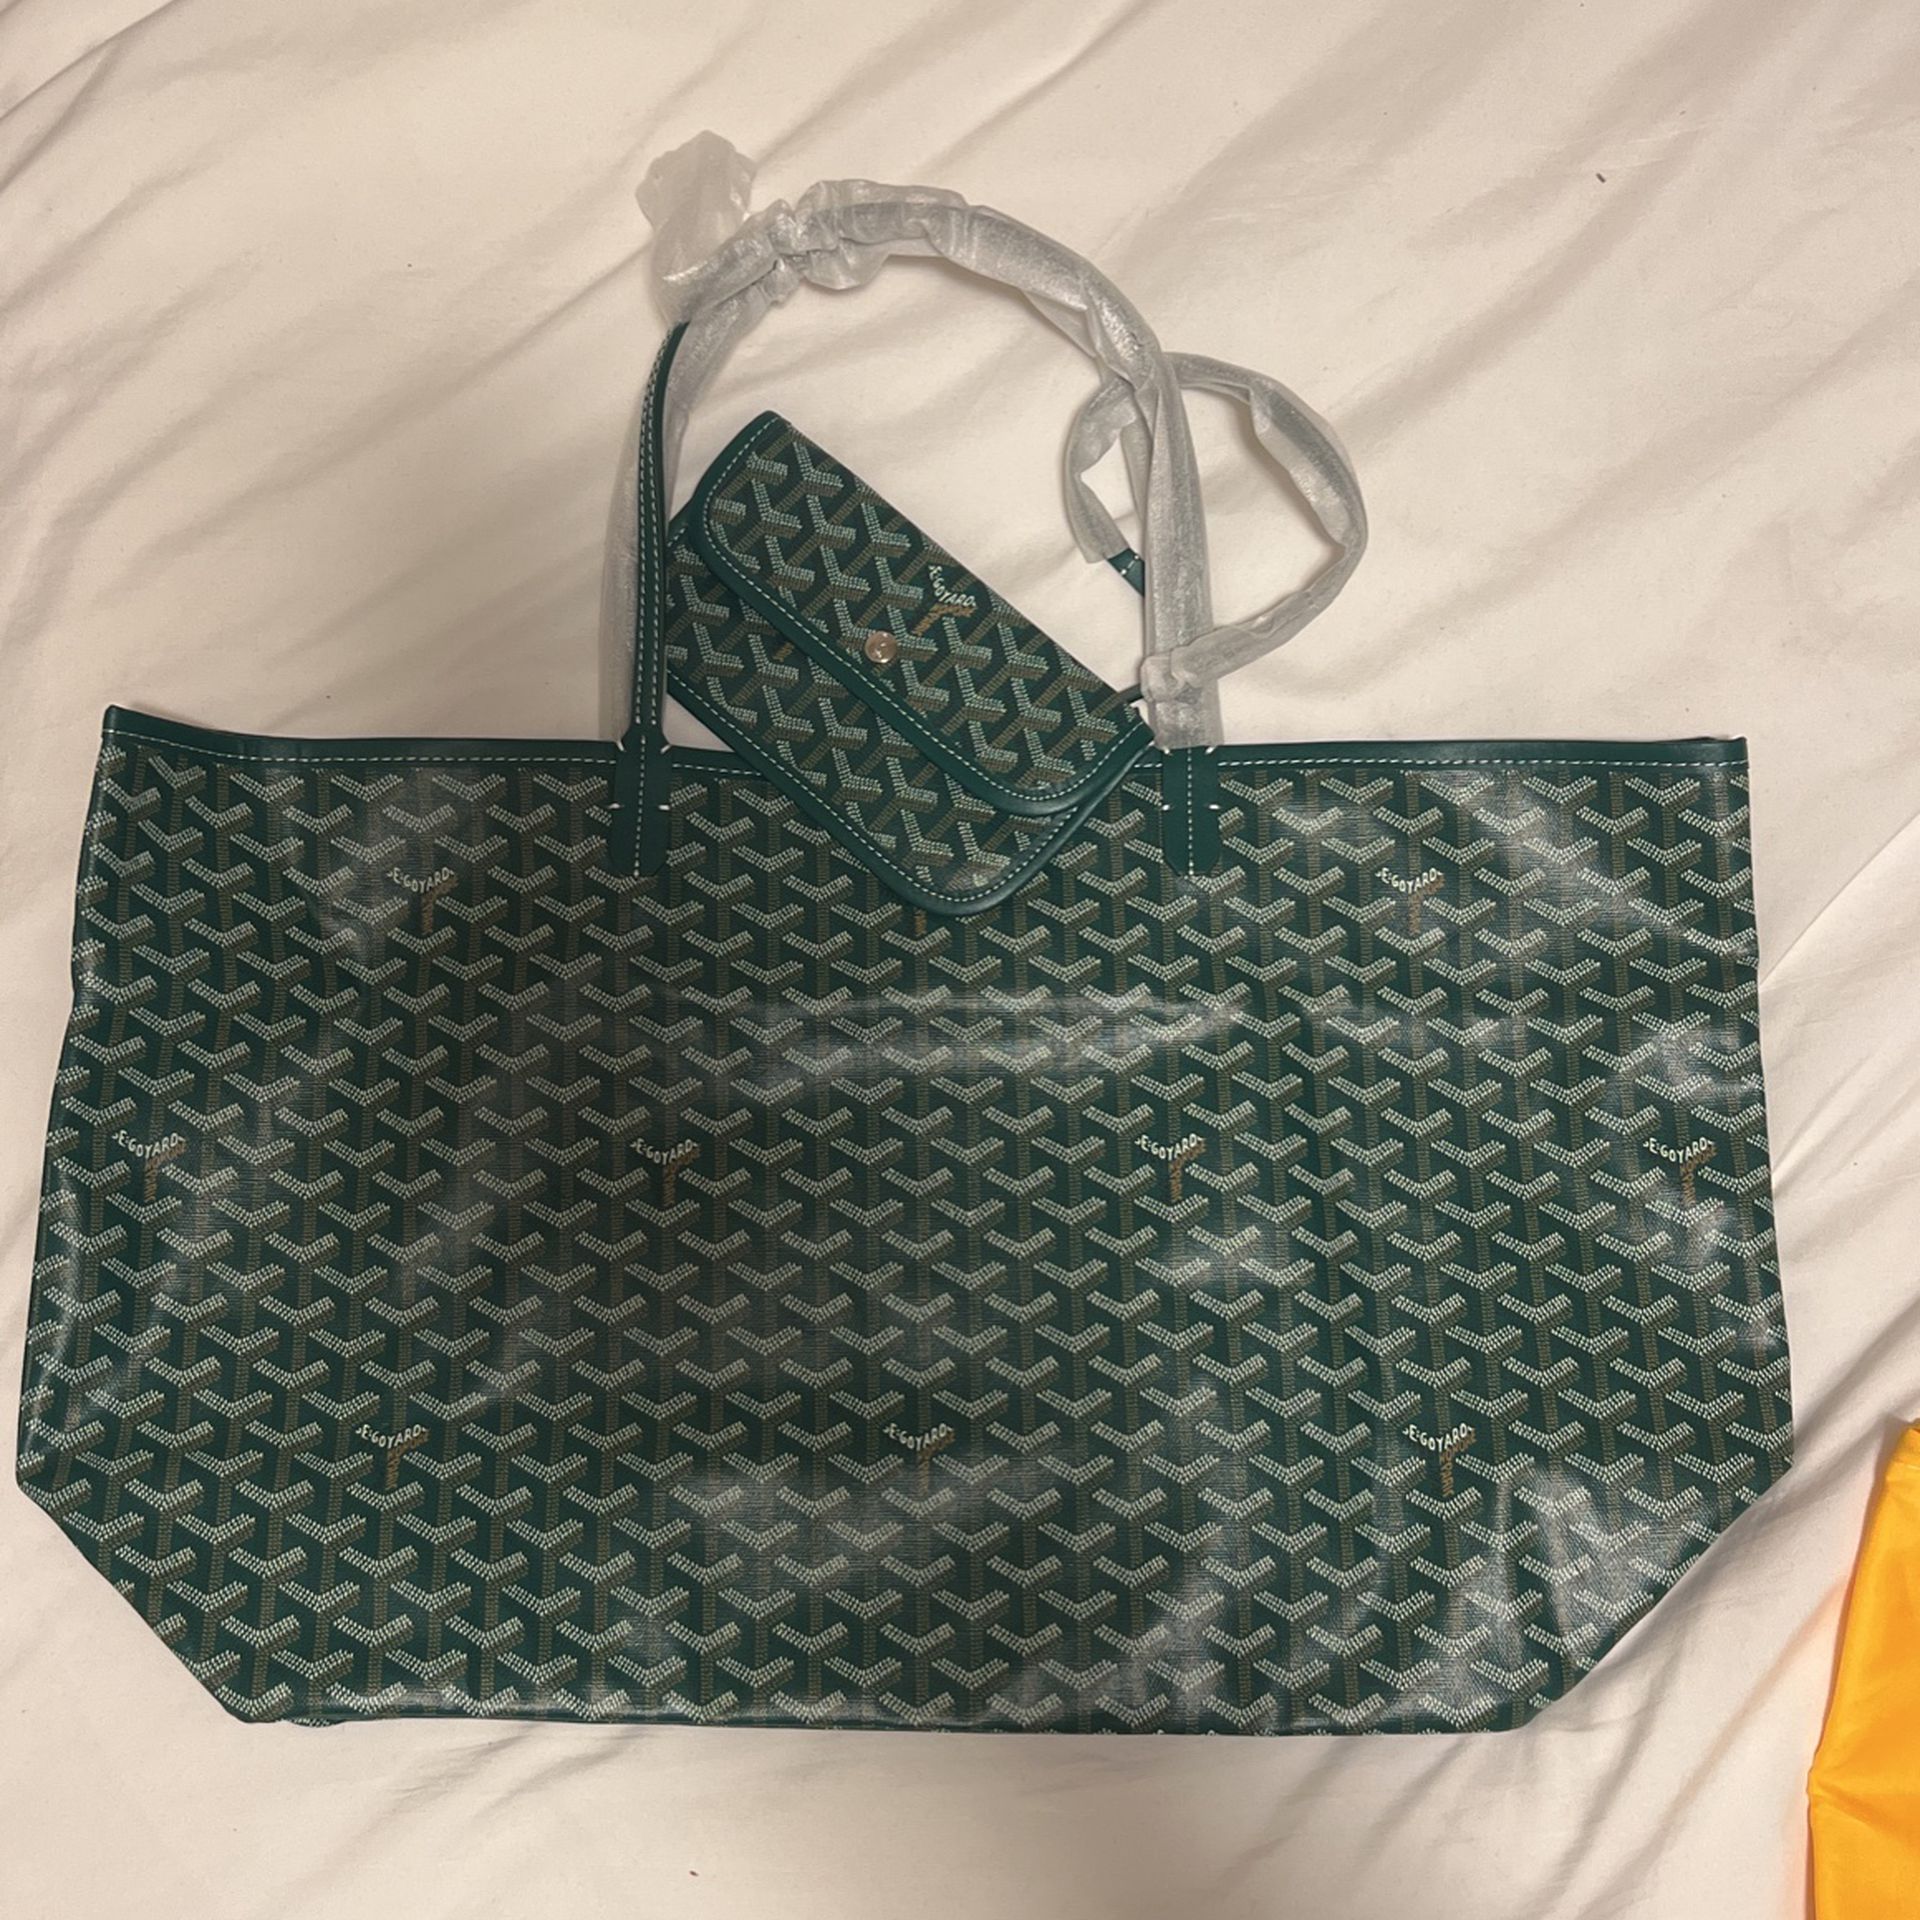 Goyard Bag for Sale in Easton, CT - OfferUp